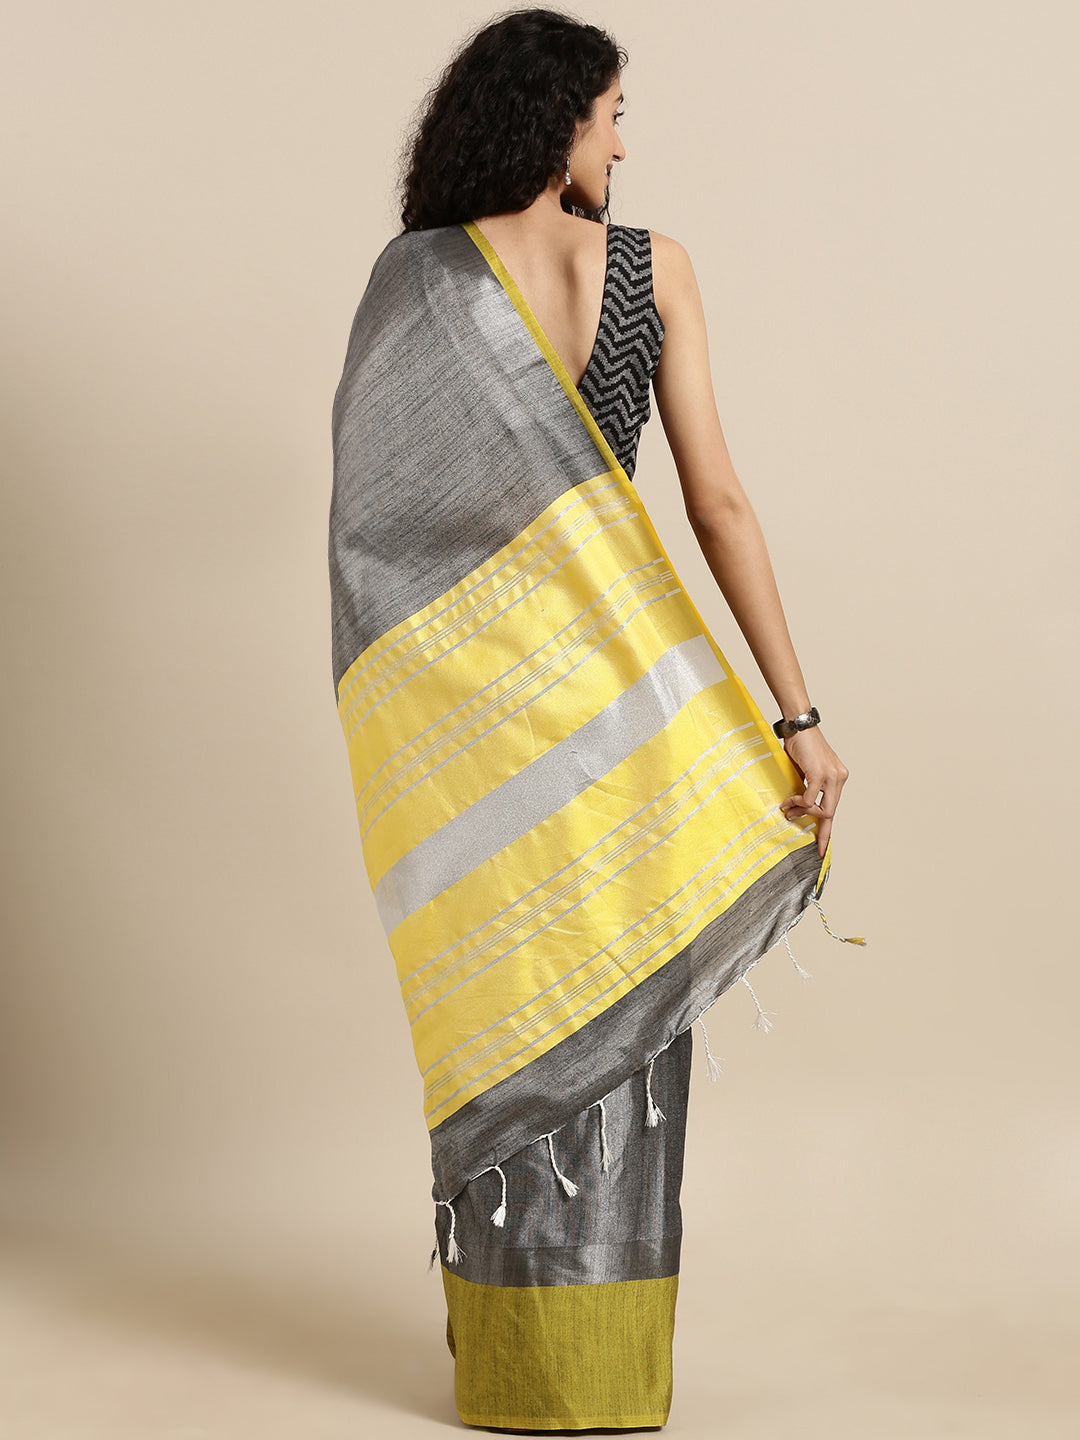 Stylish Grey Colour Solid Linen Blend Saree with Zari Border